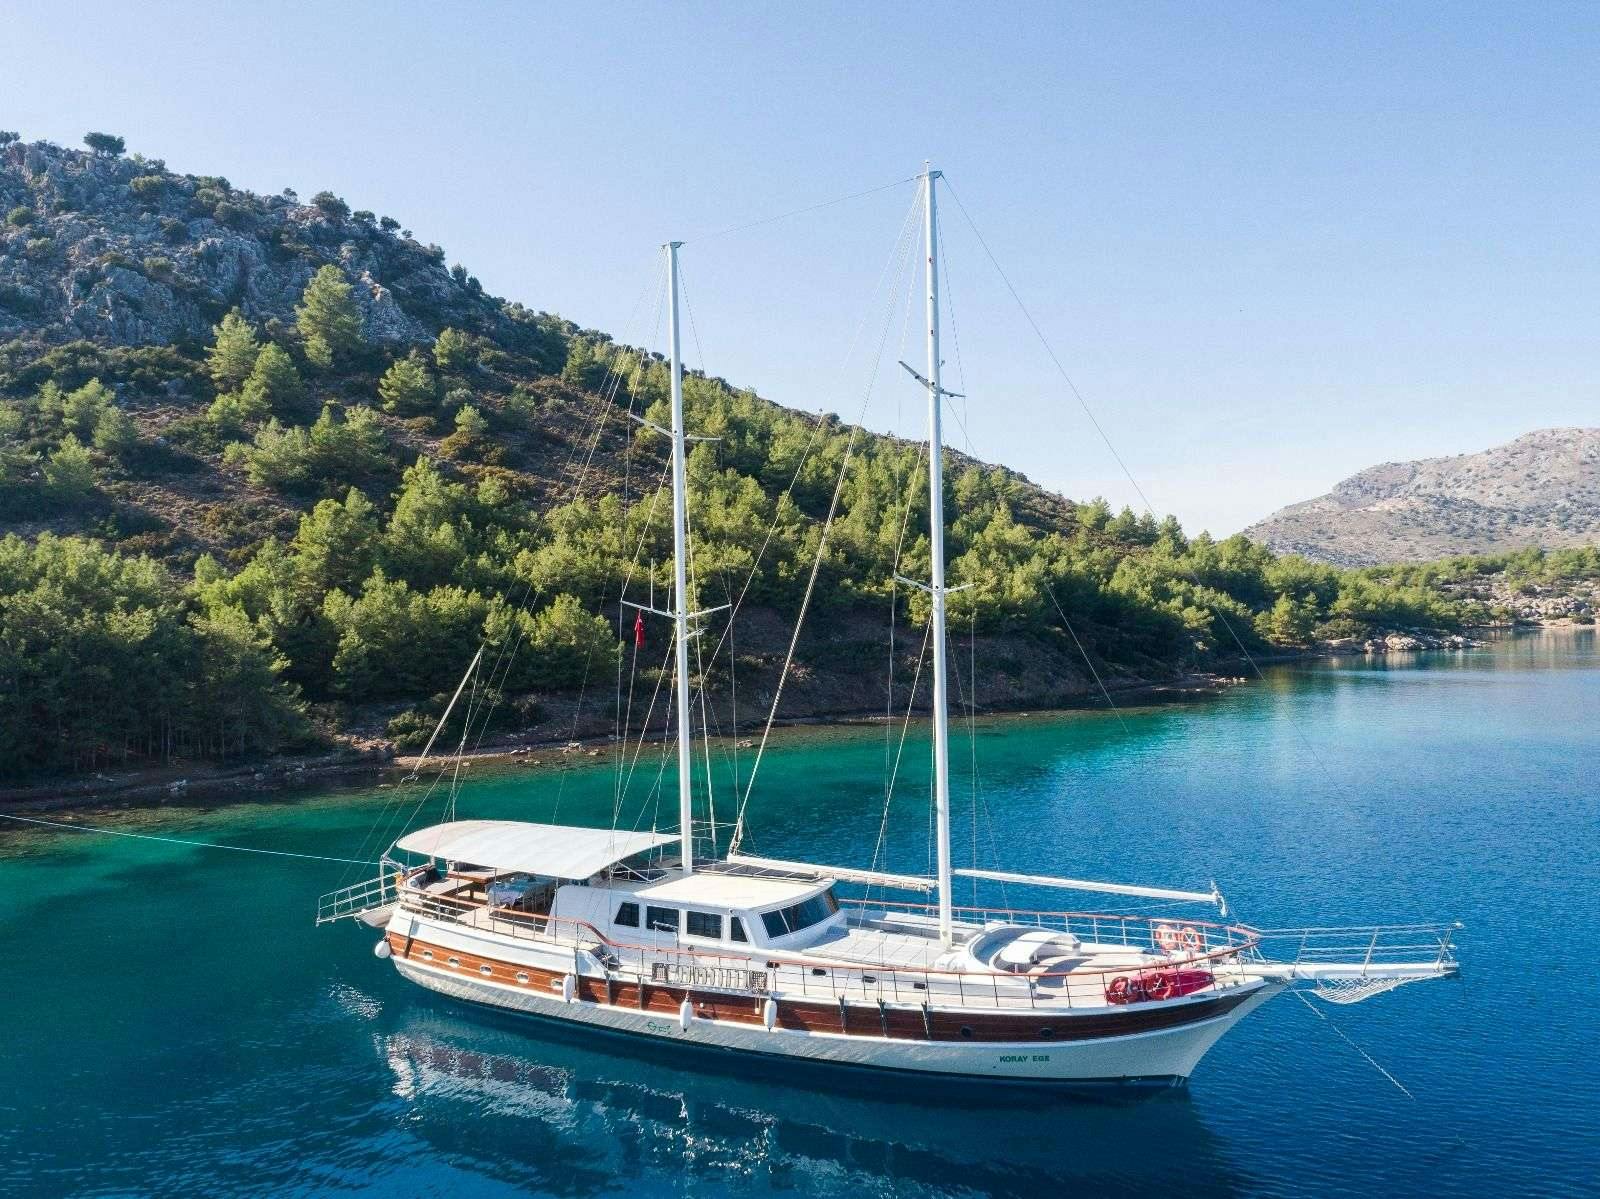 koray ege - Yacht Charter Sami & Boat hire in Greece & Turkey 1